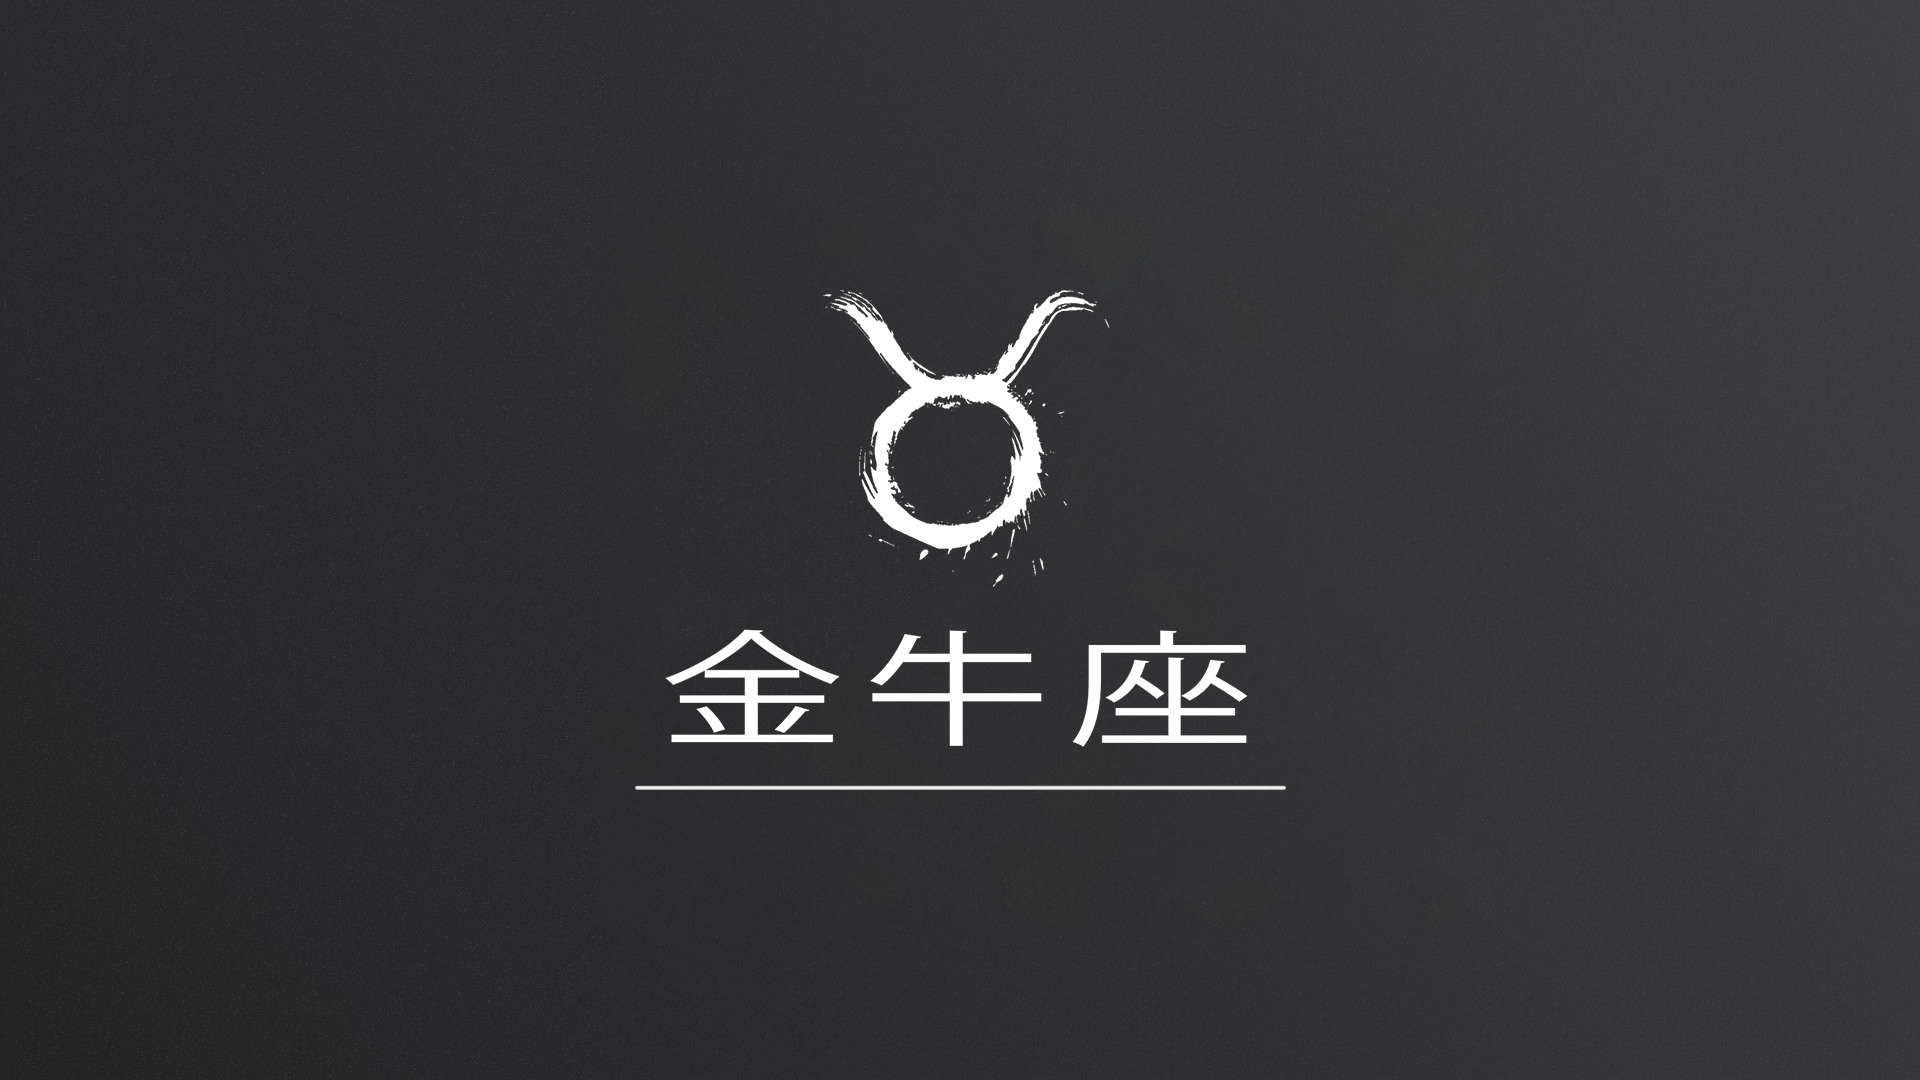 General 1920x1080 Zodiac kanji simple background minimalism artwork monochrome Taurus (sign)